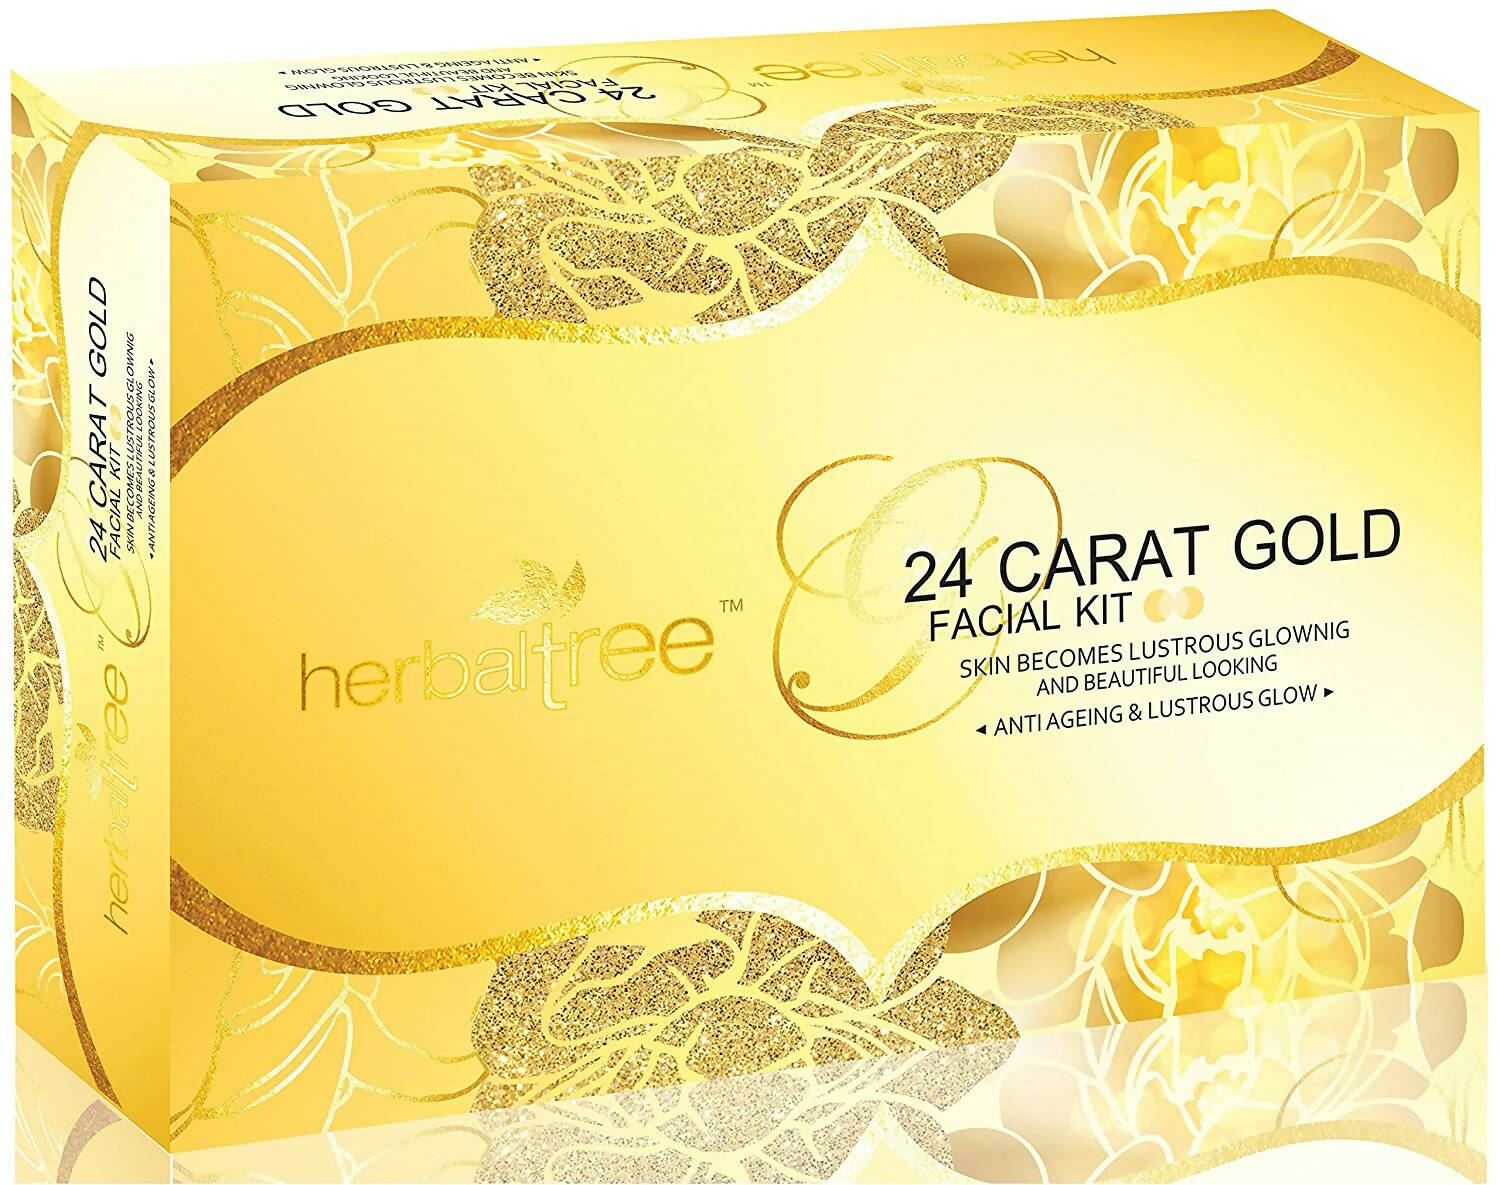 Herbal Tree 24 Carat Gold Facial kit For Anti-Ageing, Gold Radiance & Instant Glow - BUDNE